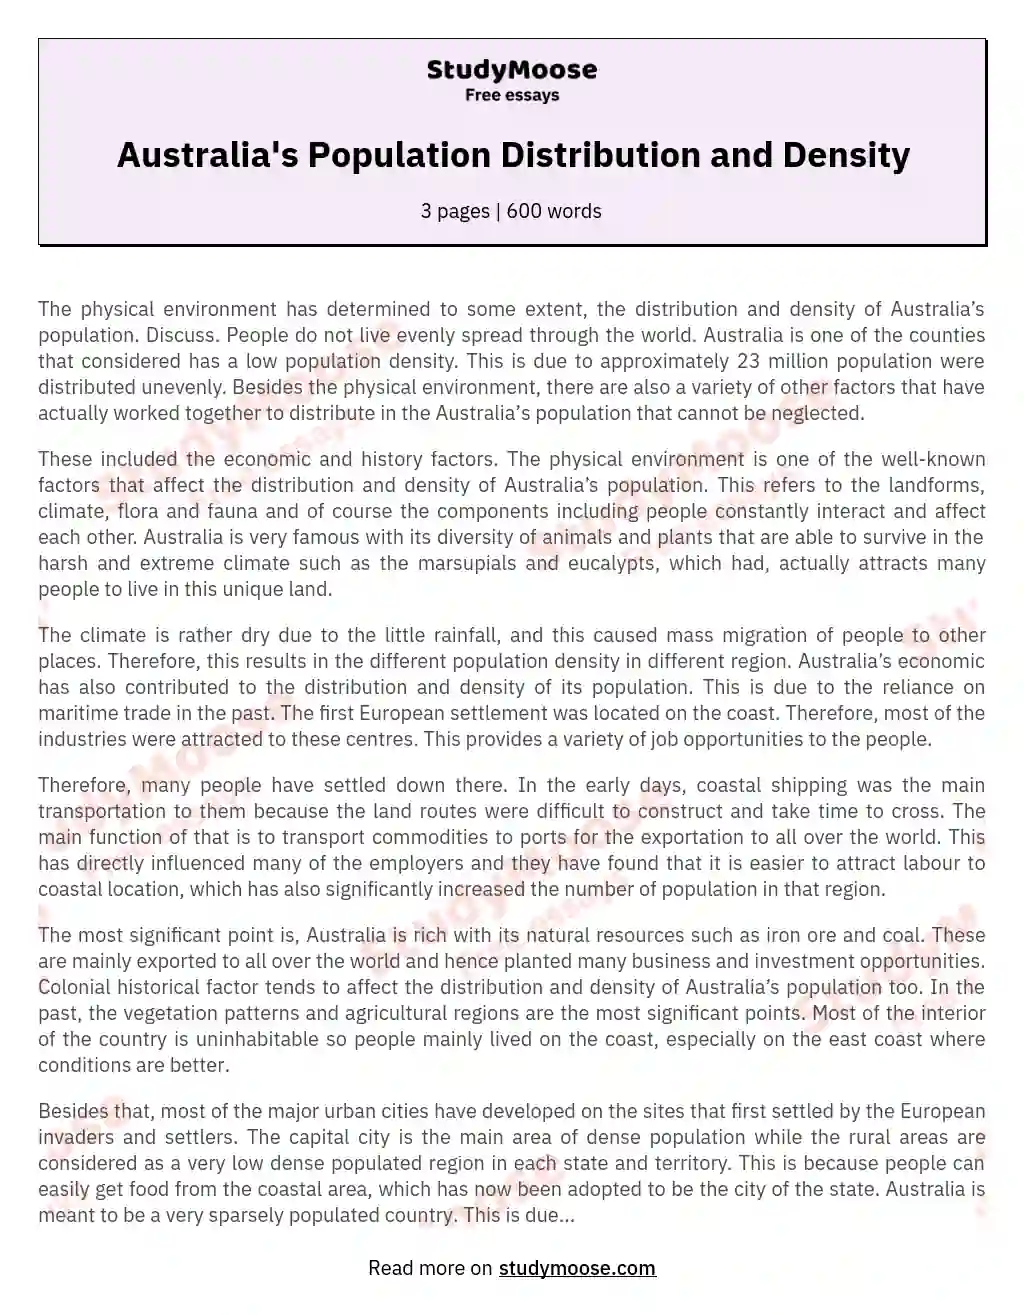 Australia's Population Distribution and Density essay